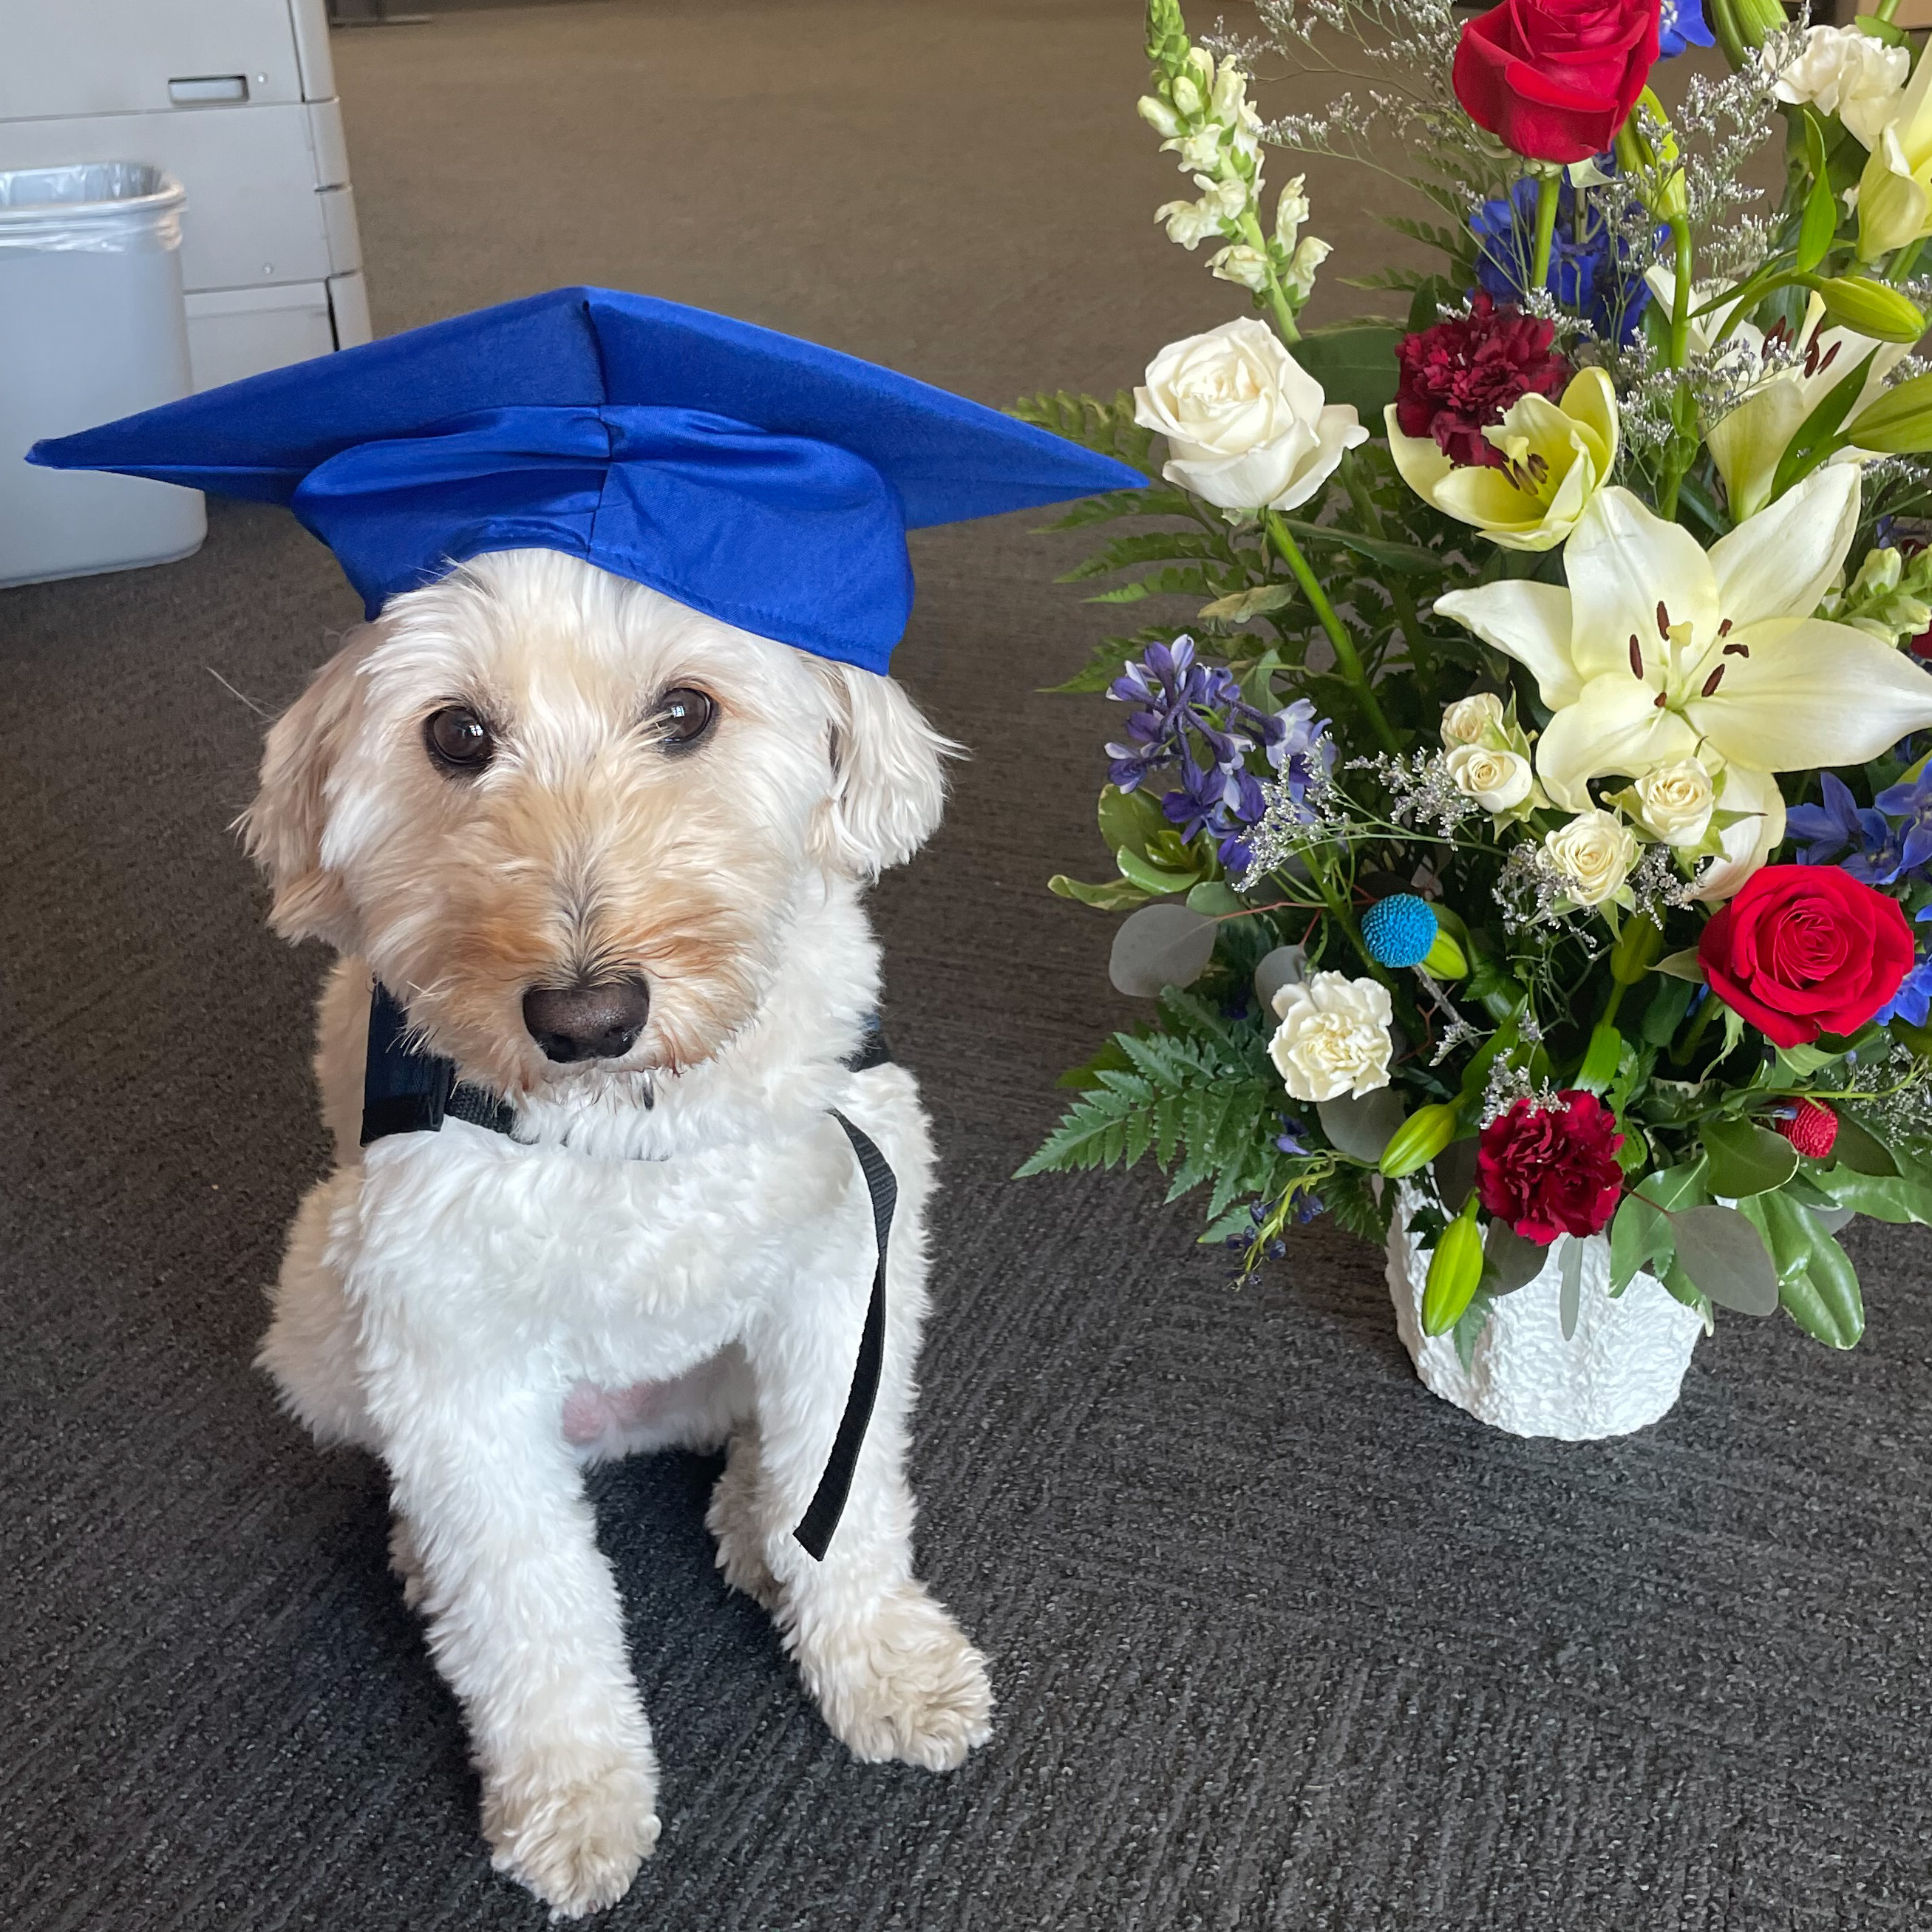 A white dog wearing a blue MV graduation cap next to a bouquet of flowers